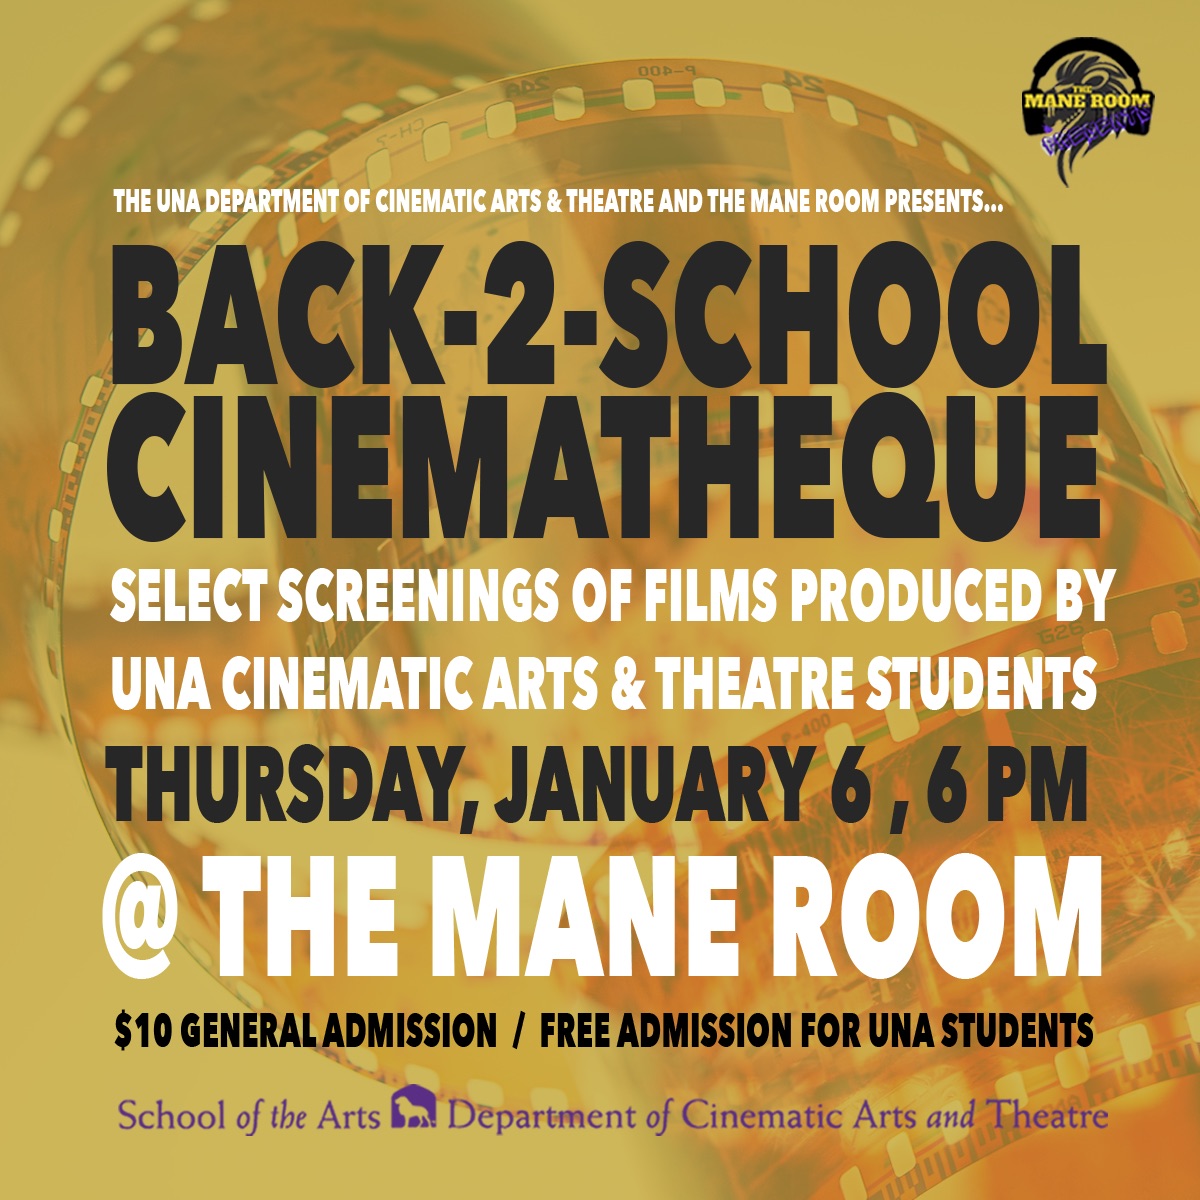 Back-2-School Cinematheque